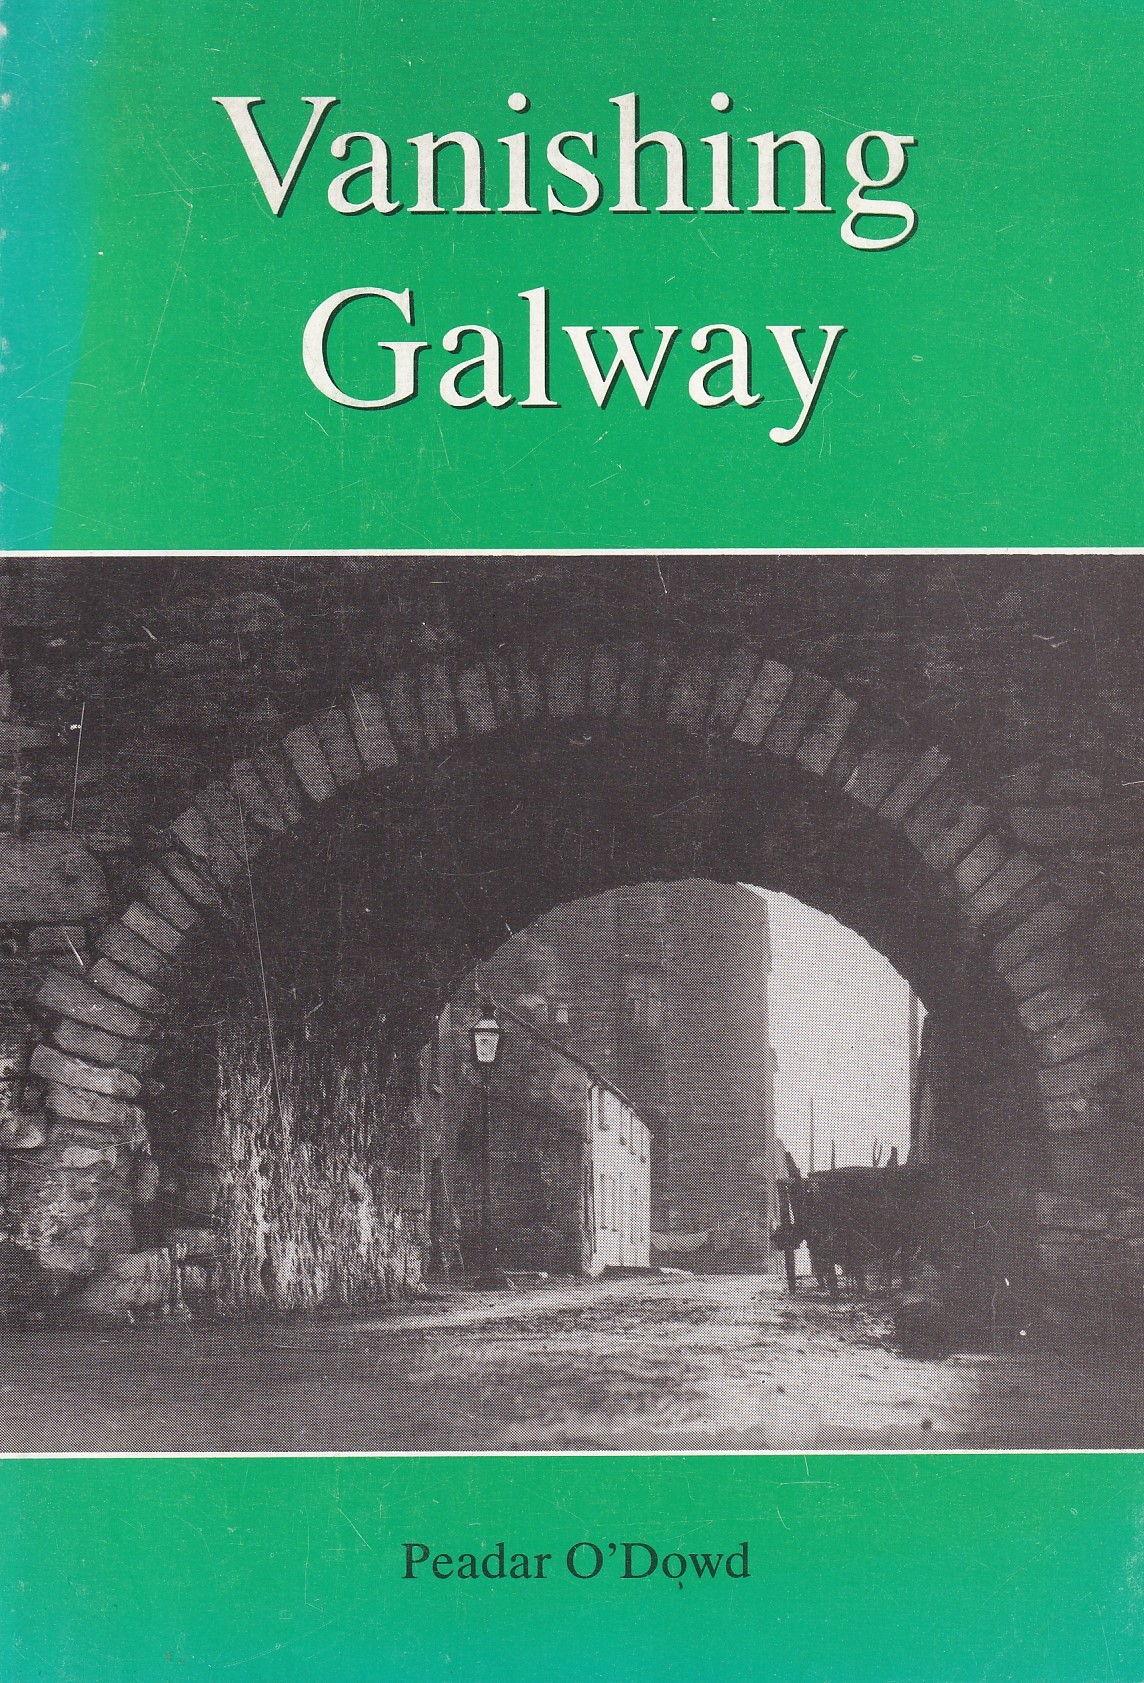 Vanishing Galway by Peadar O'Dowd